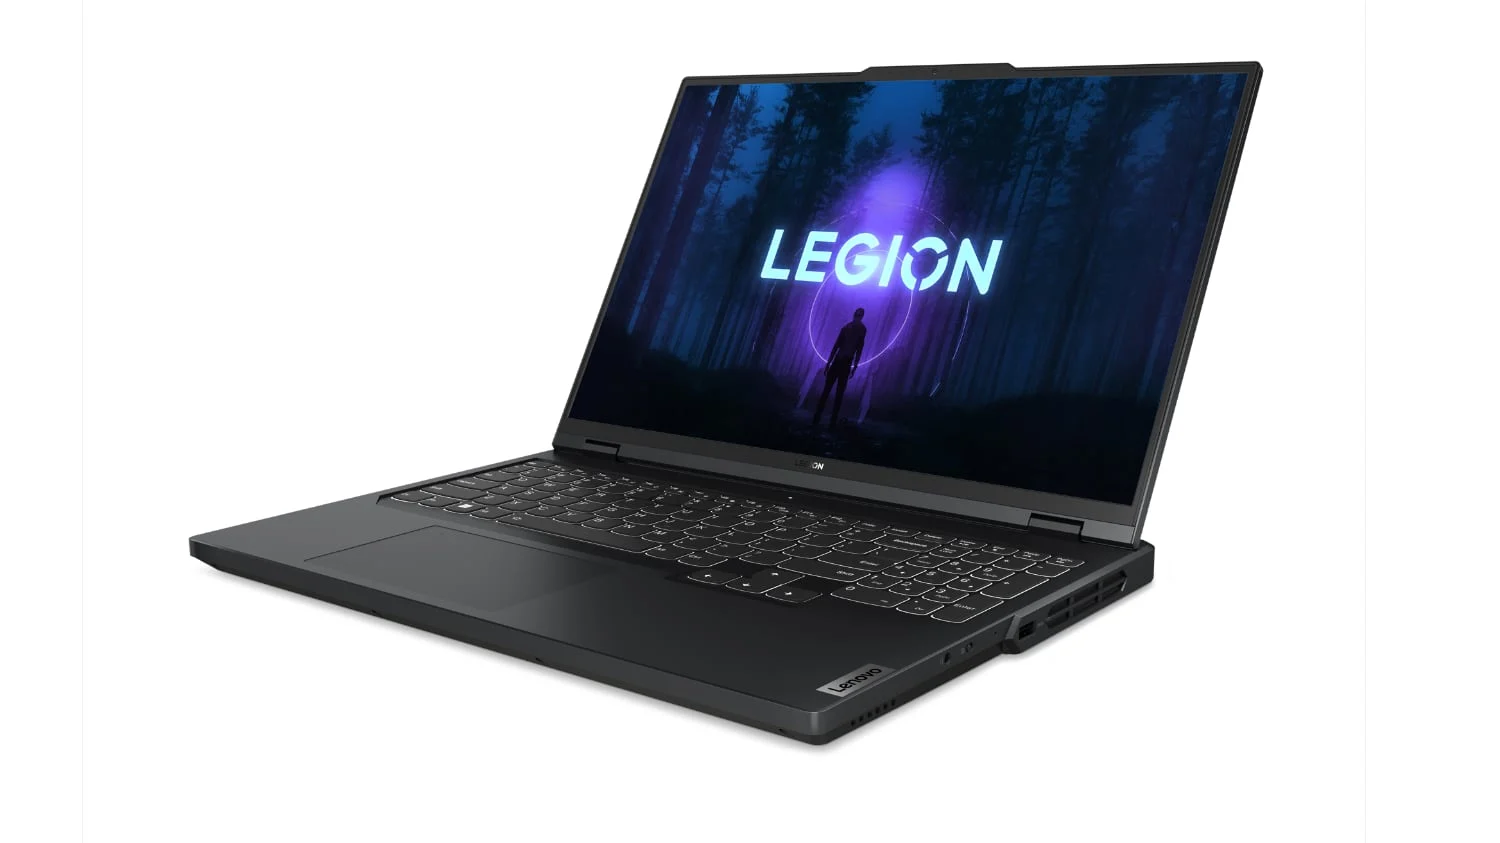 PR image of Lenovo Legion Pro 5i gaming laptop against a plain white background